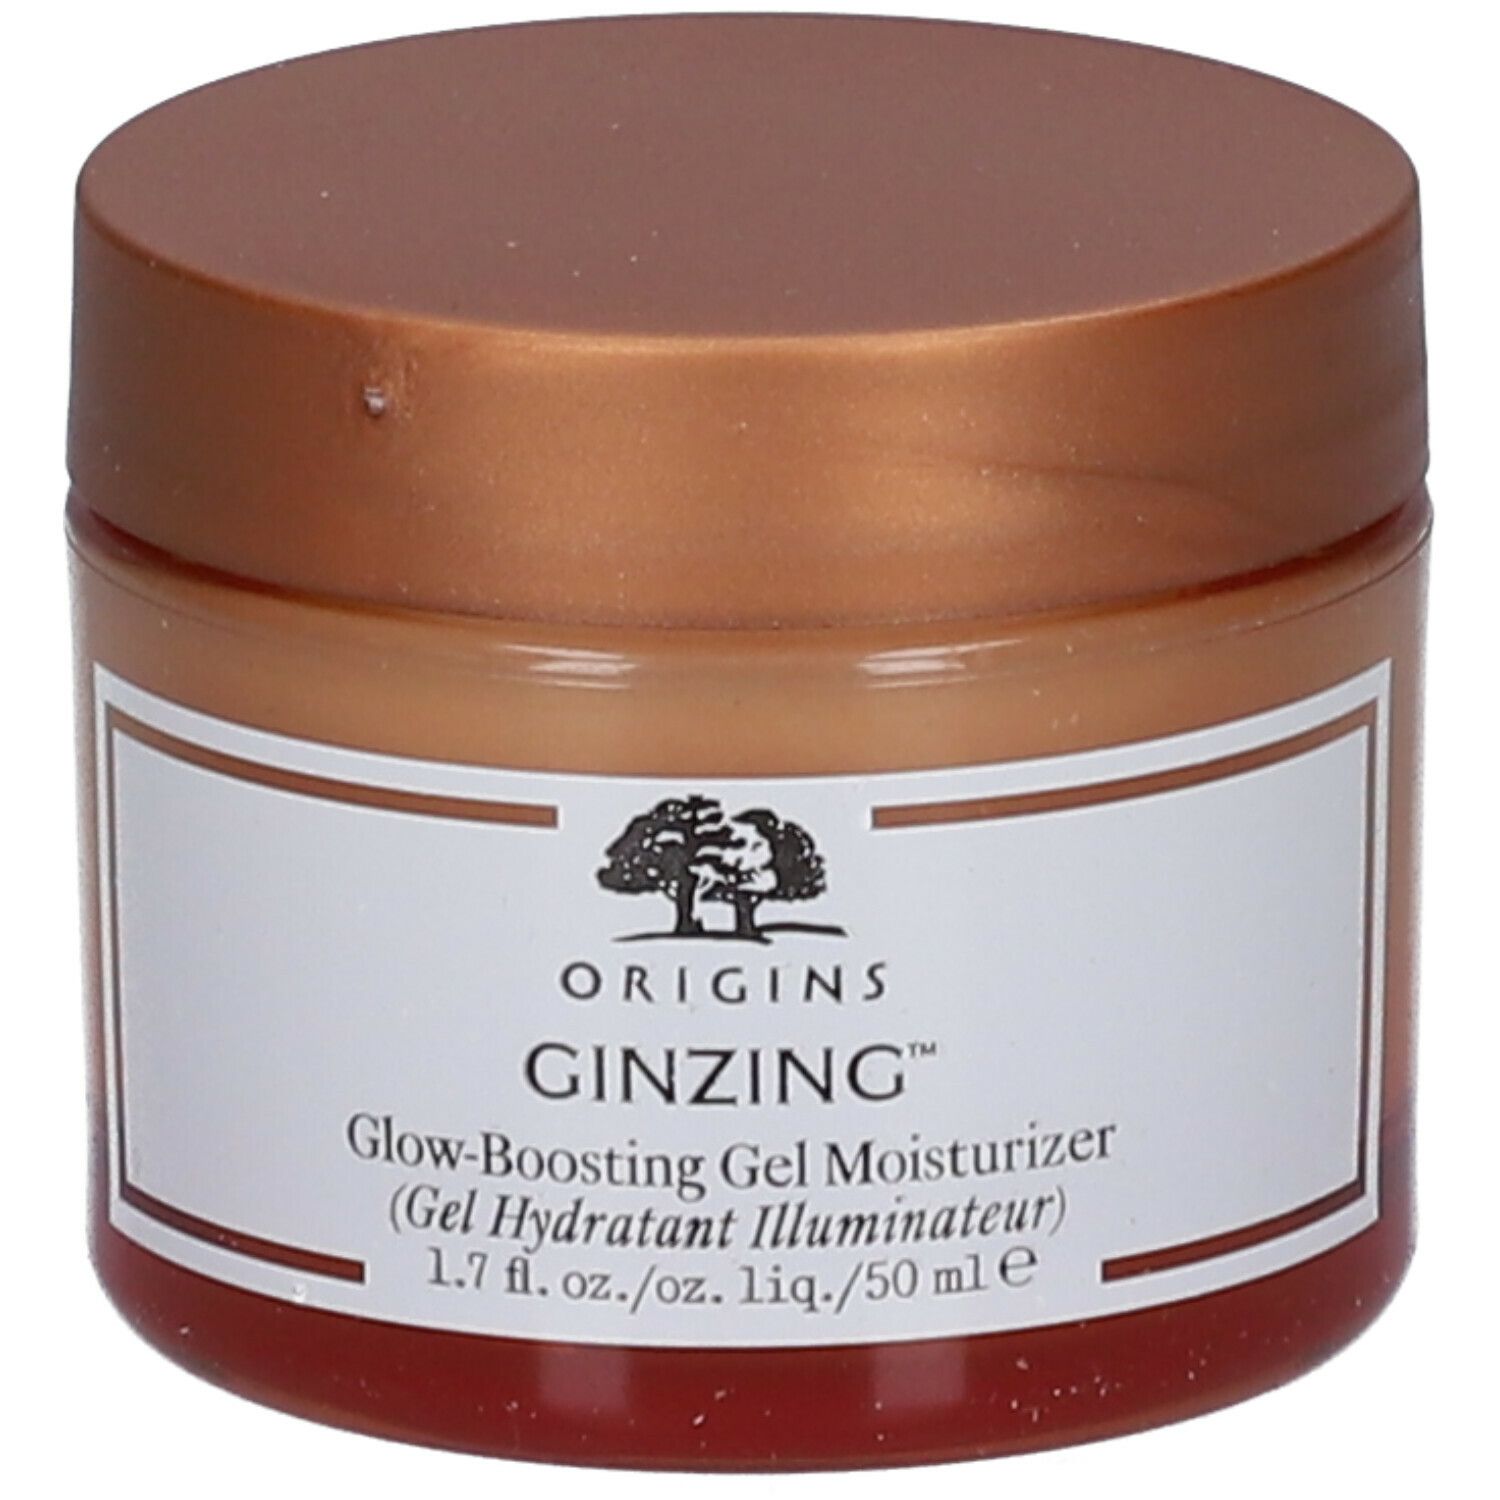 Origins GinZing™ Glow-Boosting Gel Moisturizer